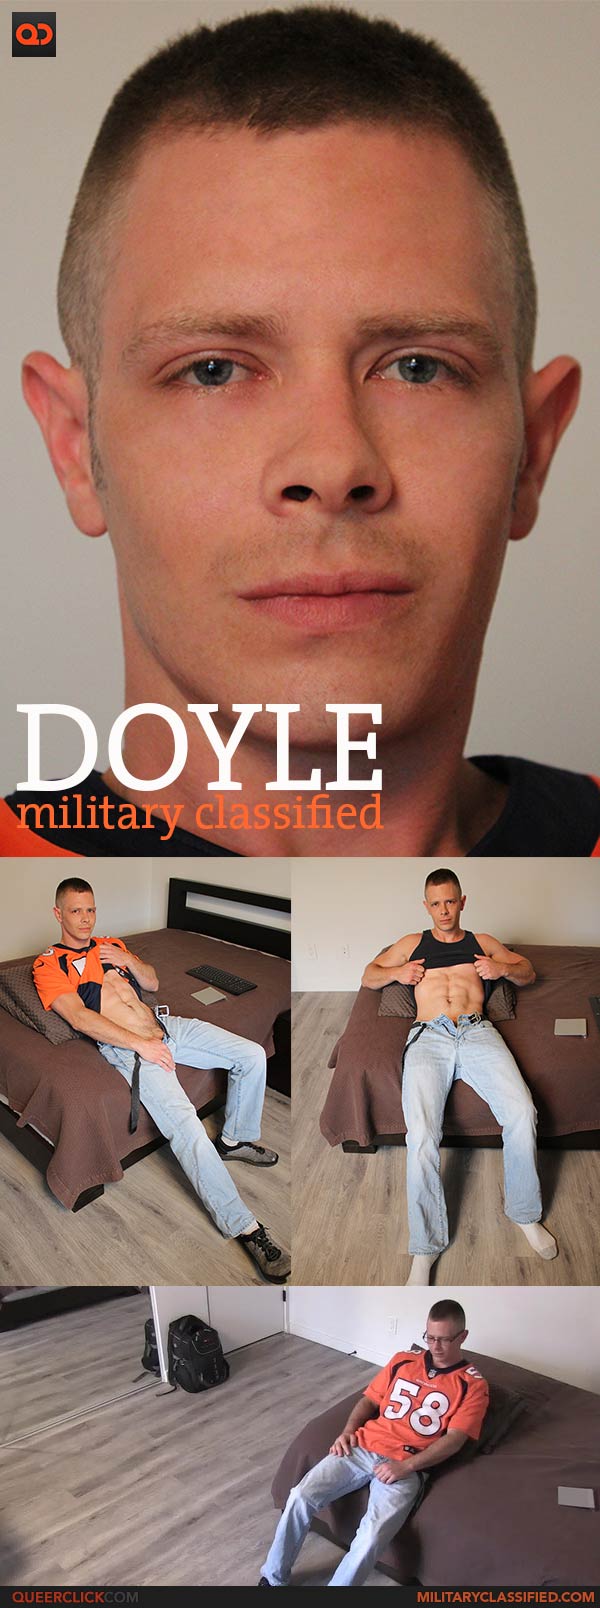 Military Classified: Doyle